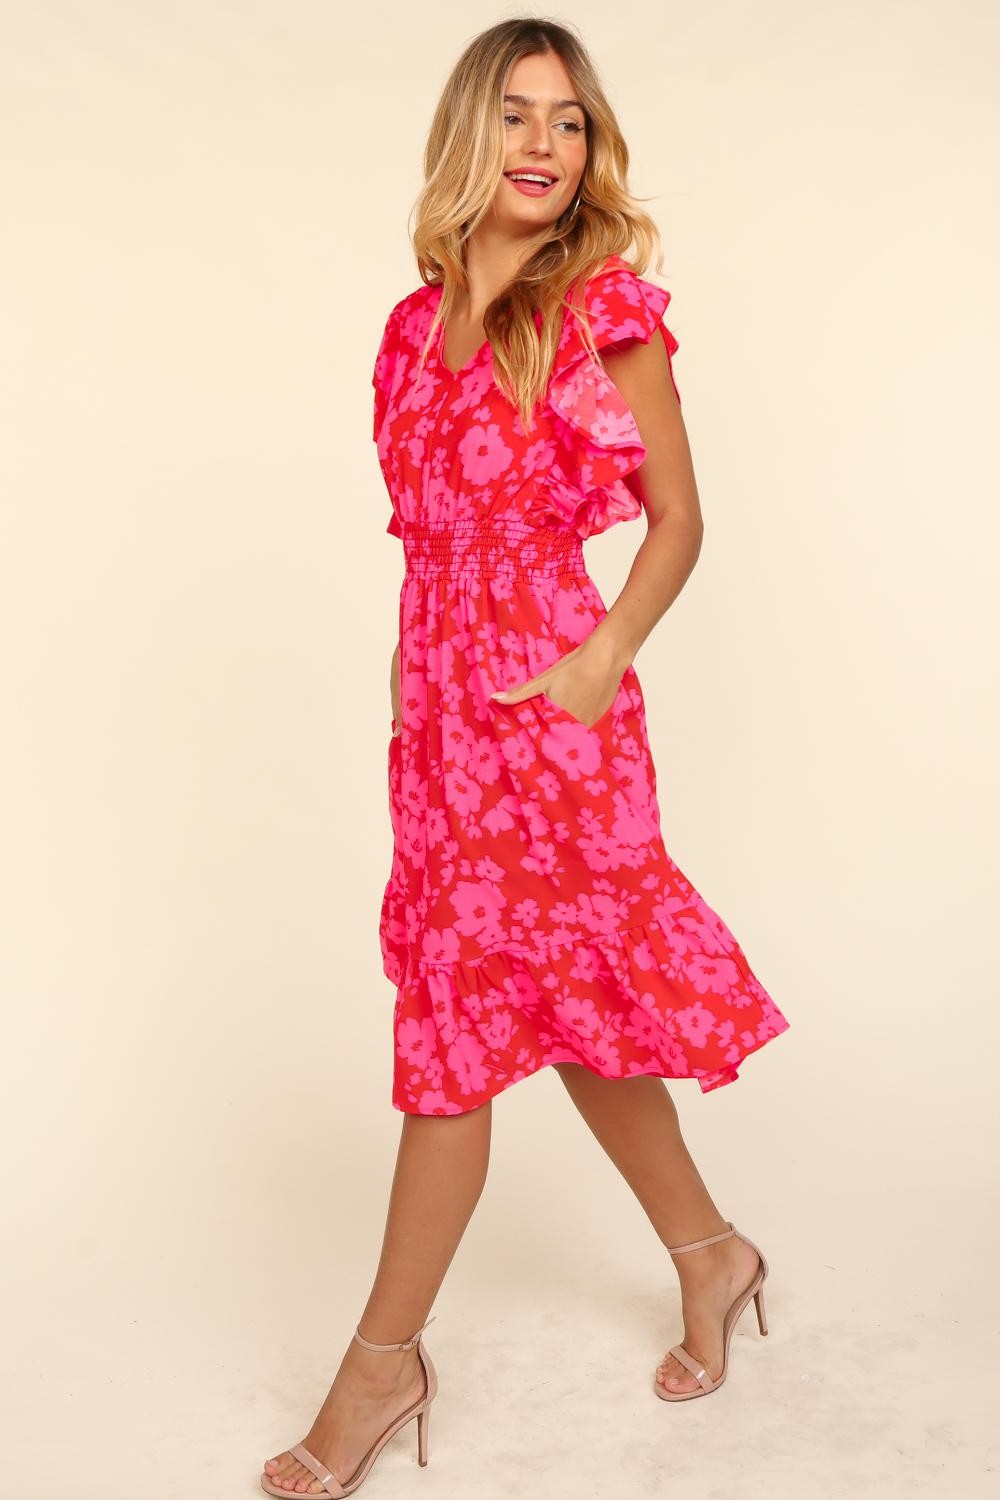 Hazel Floral Dress - KC Outfitter